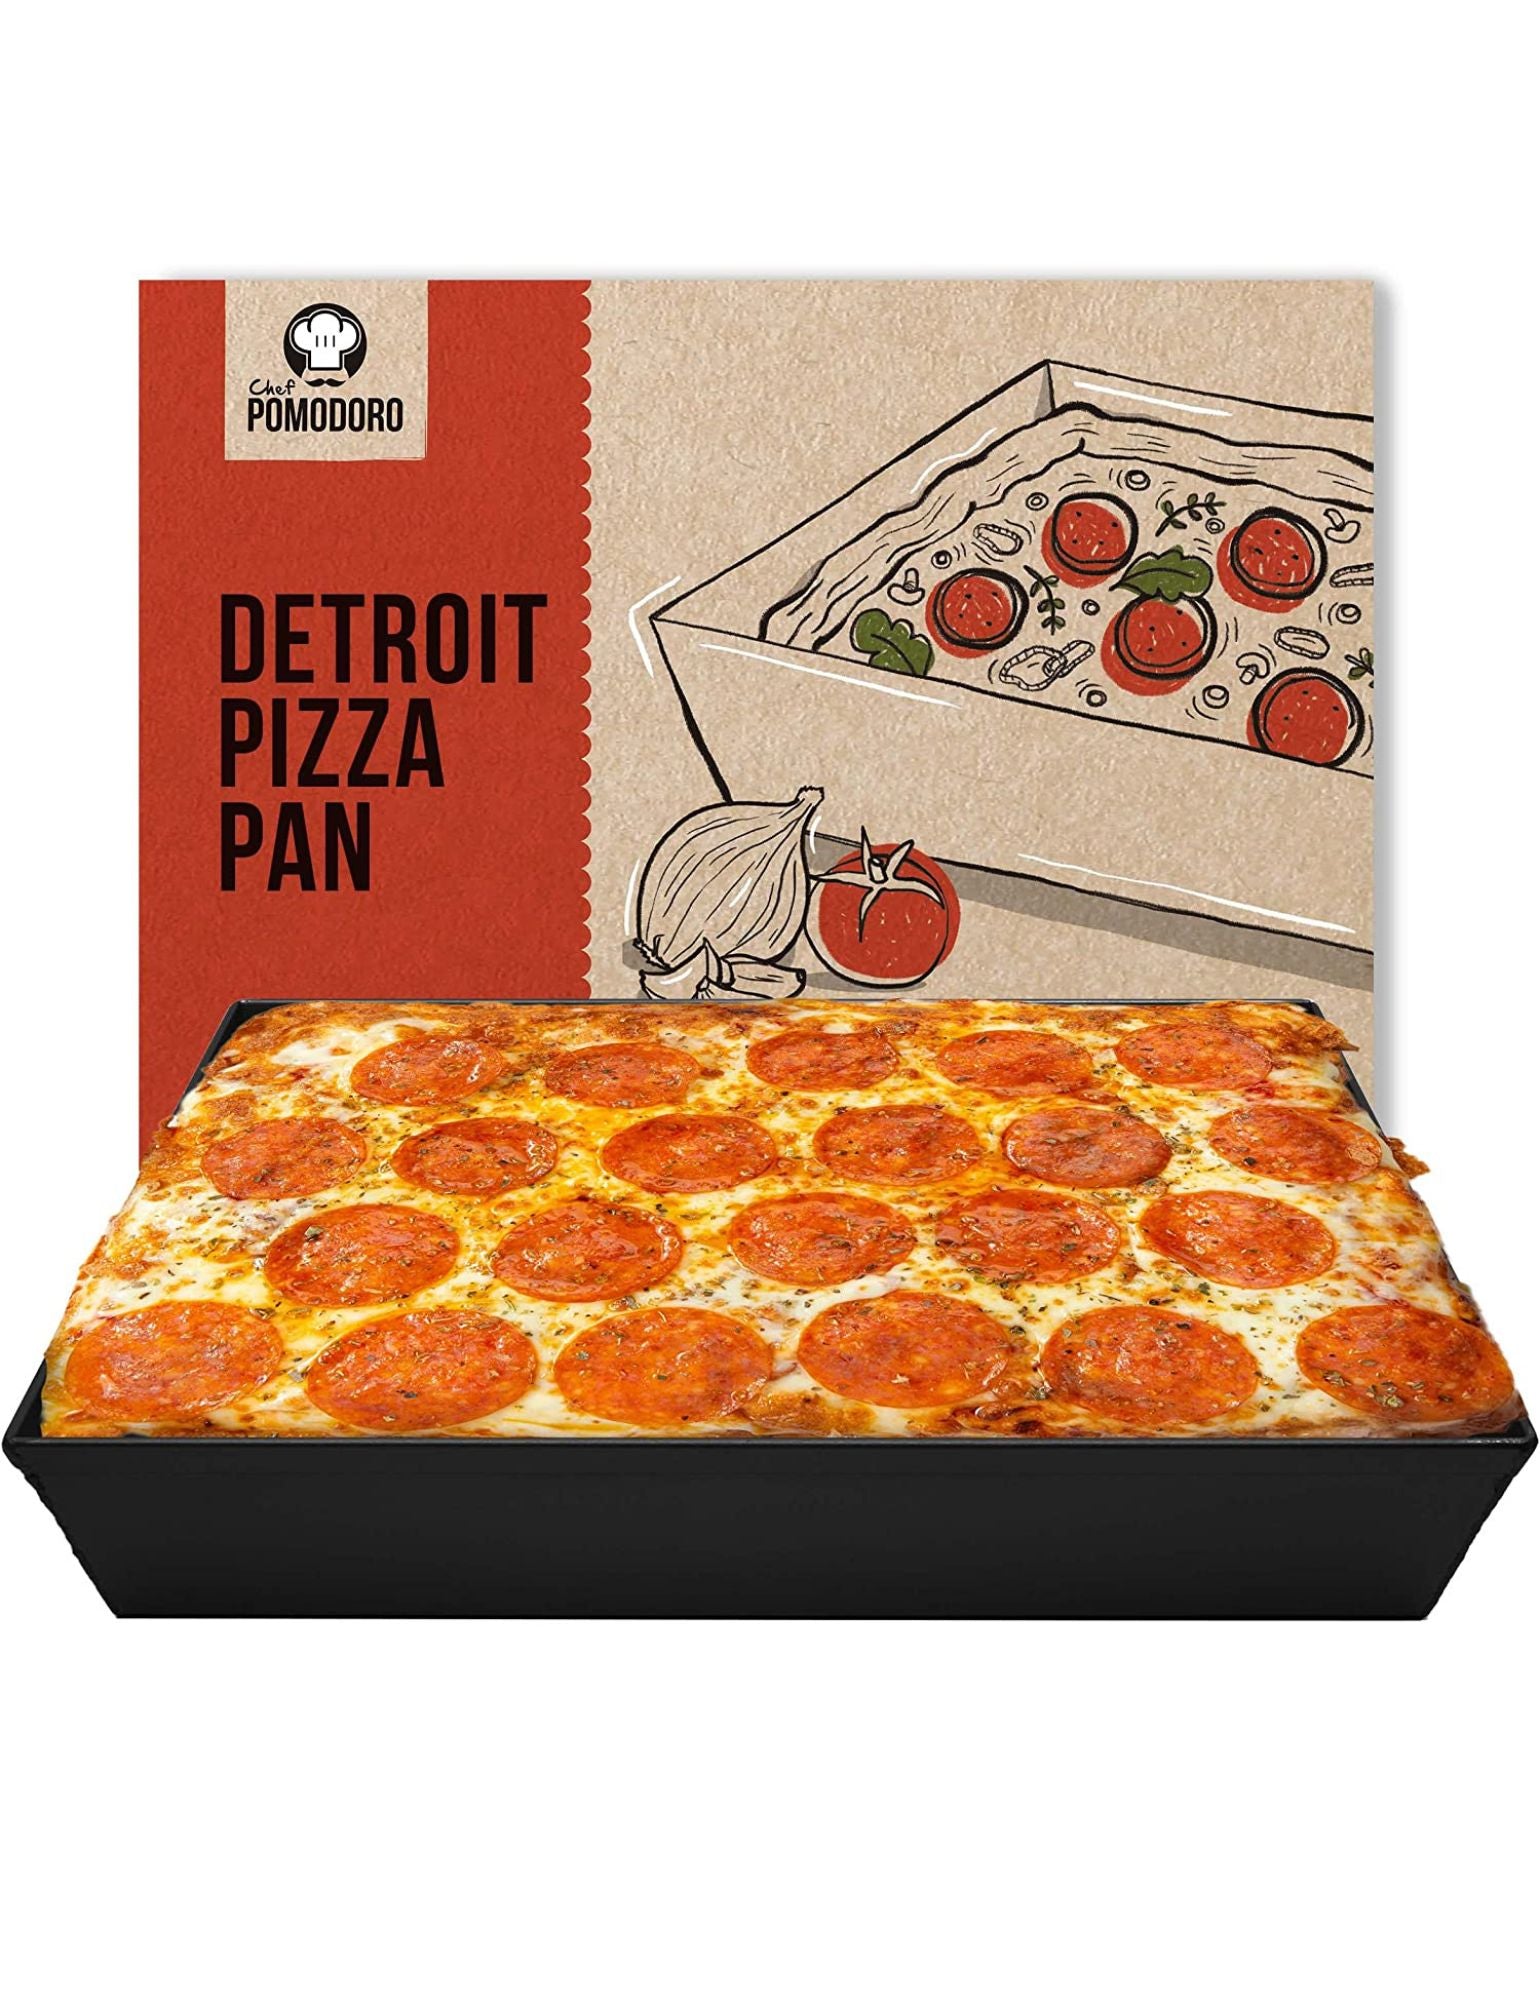 Chef Pomodoro Deep Dish Pizza Pan, Chicago Style (12-Inch)